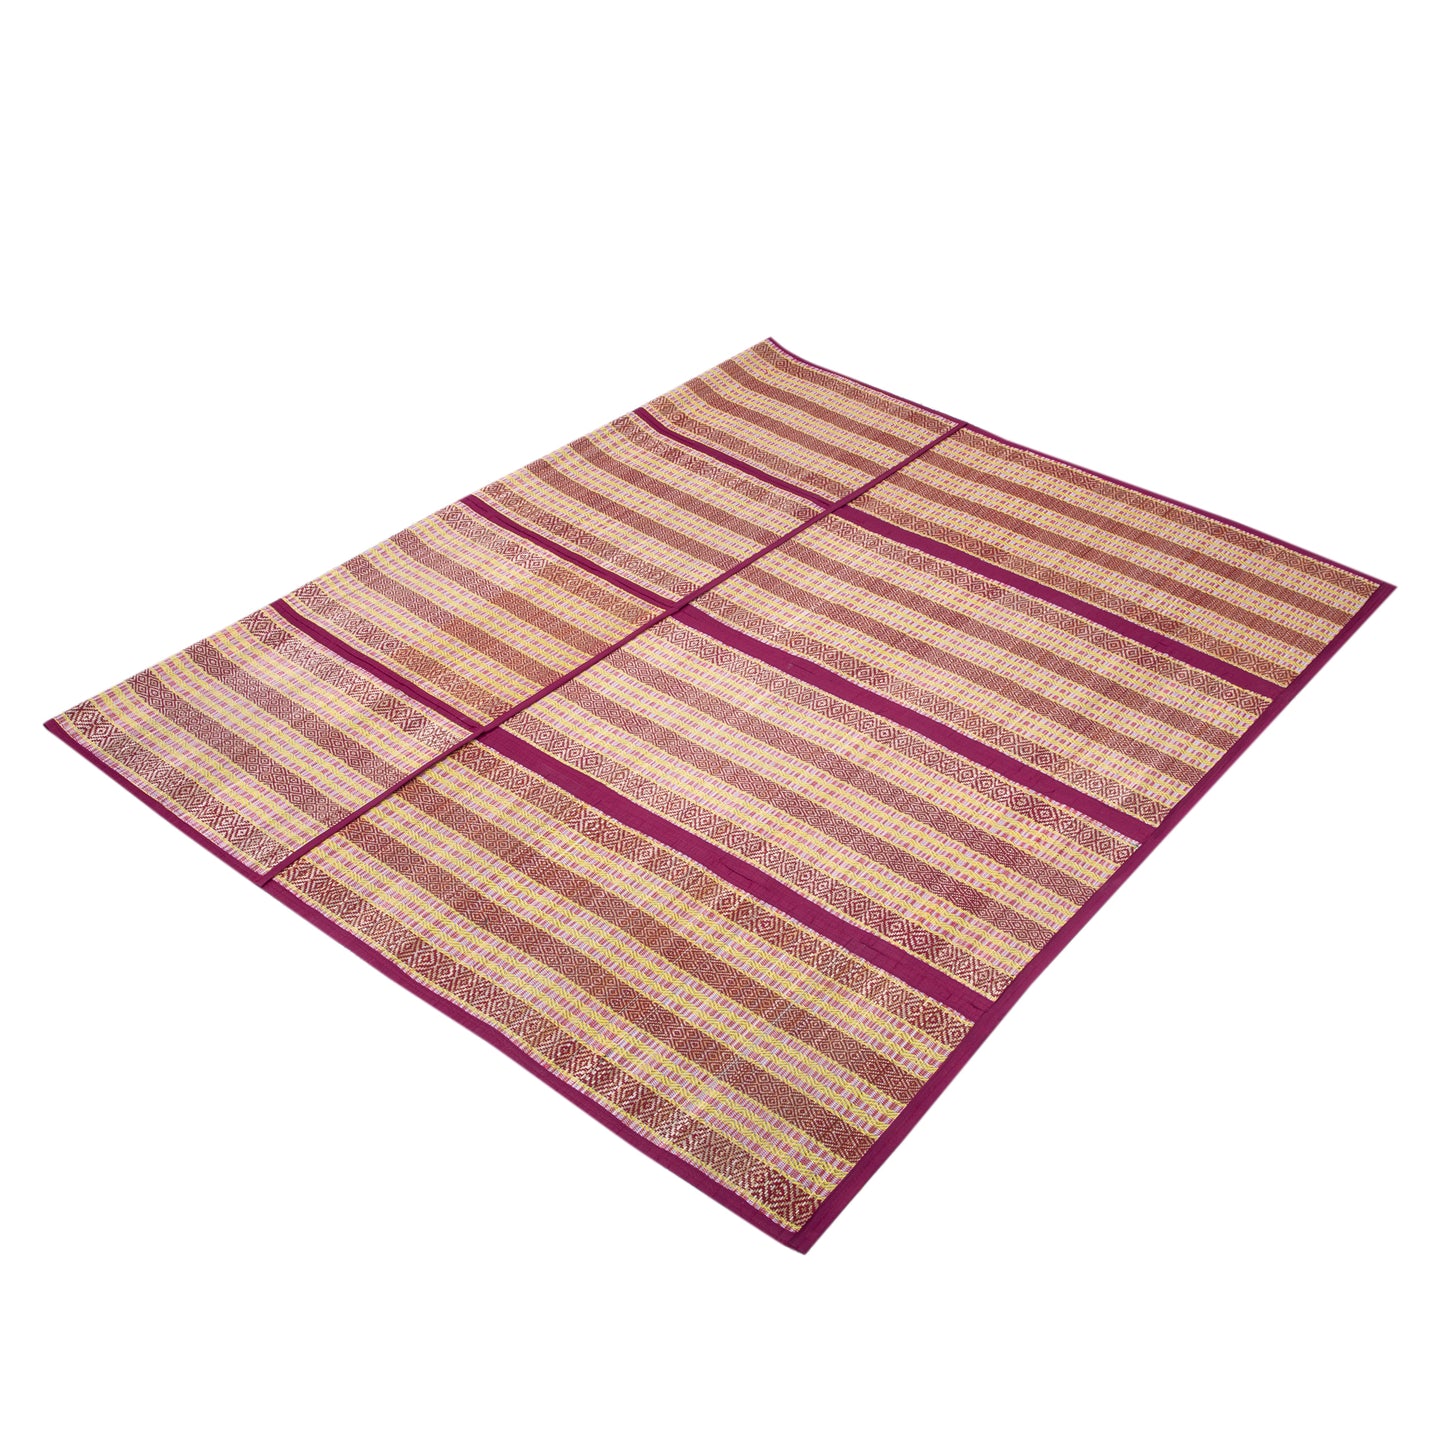 Designer Organic Chatai Mat Foldable made of Madurkathi Grass for Sleeping, Sitting on Floor - T3-37